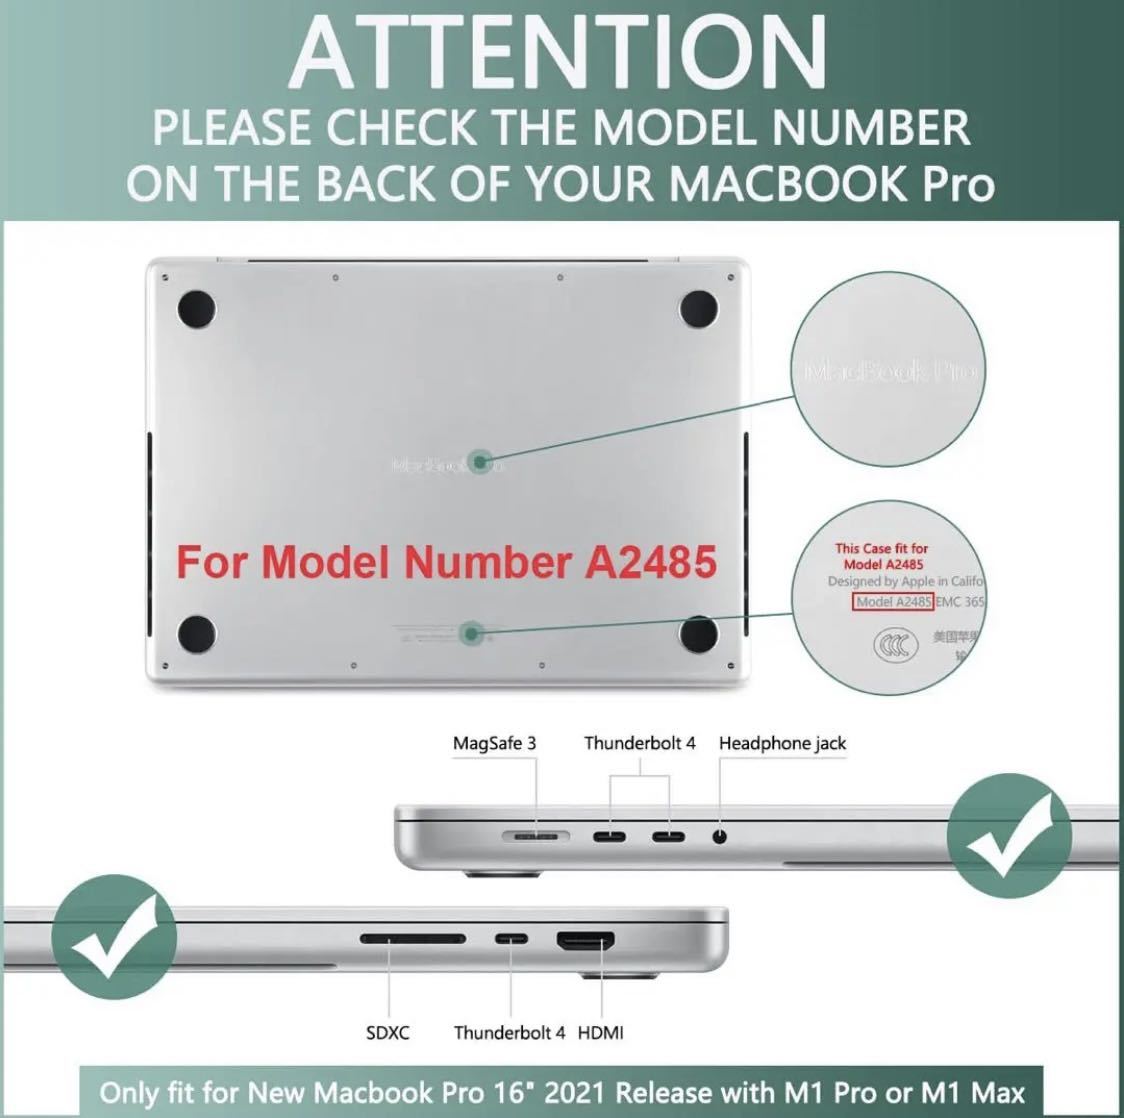 CISSOOK MacBook Pro16 -inch clear case set 